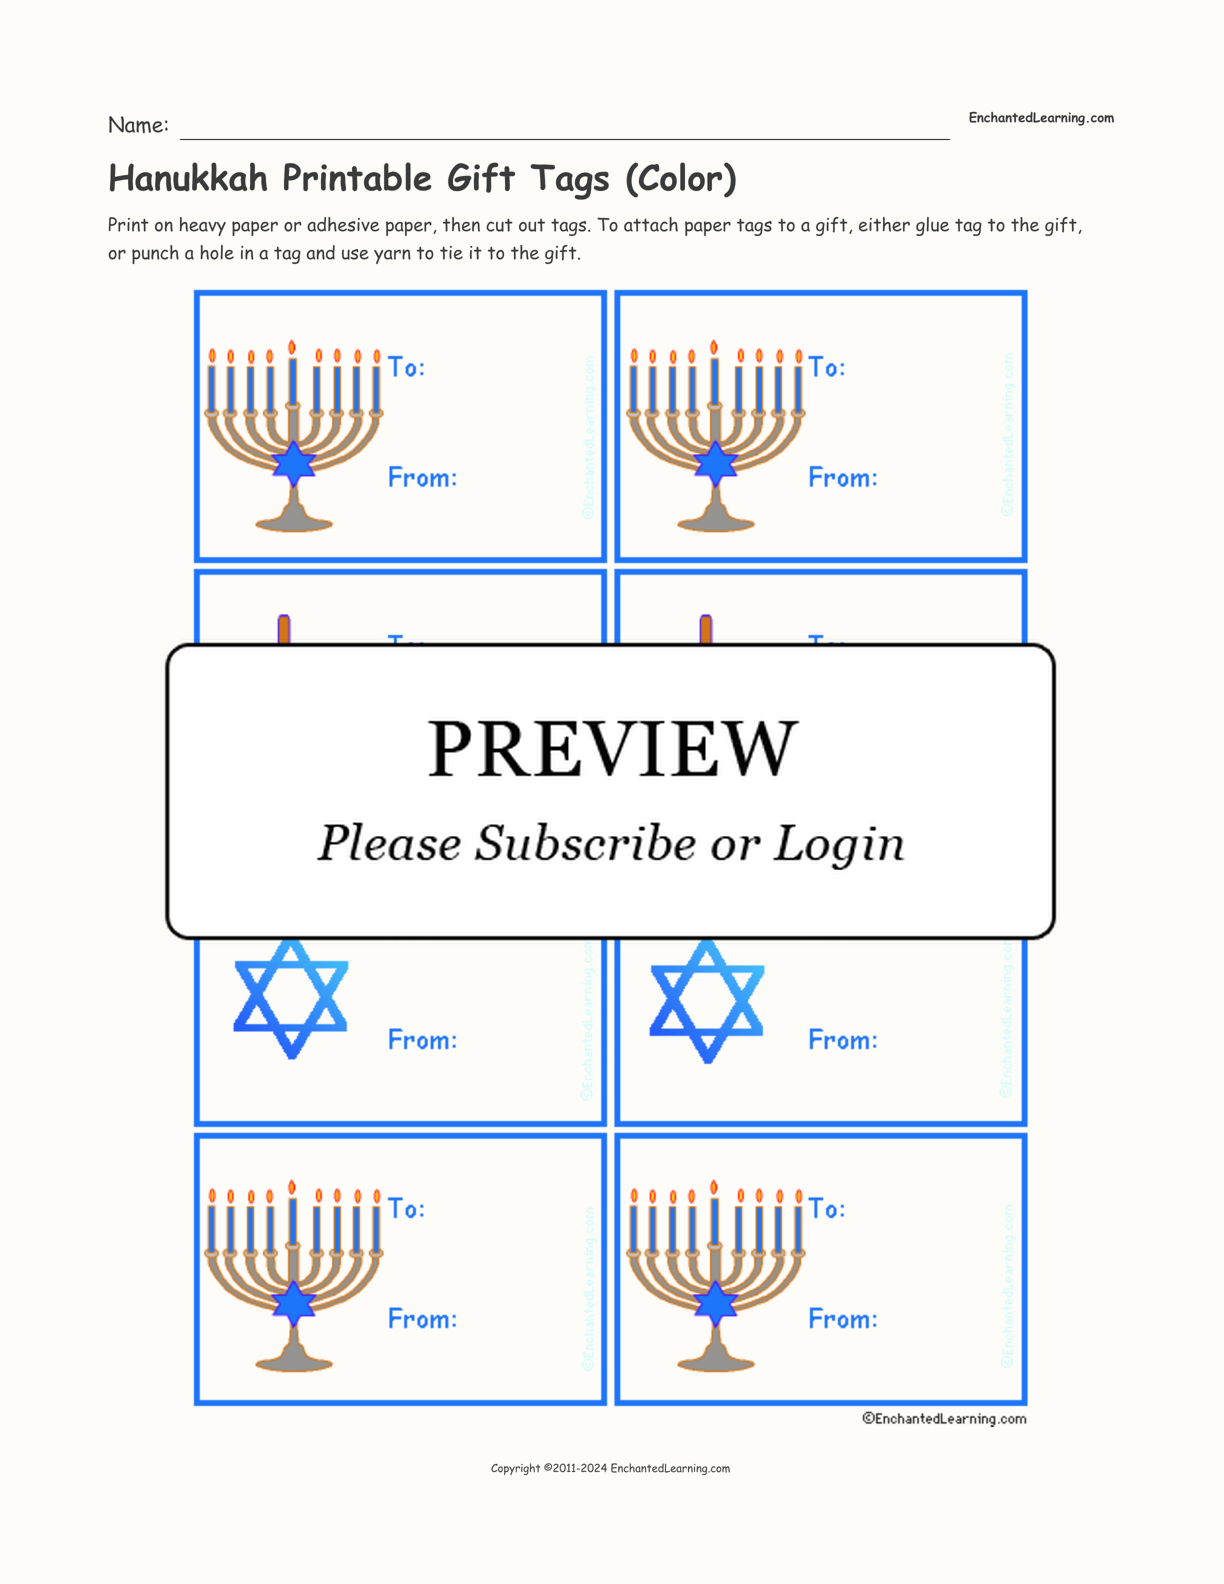 Hanukkah Printable Gift Tags (Color) interactive printout page 1